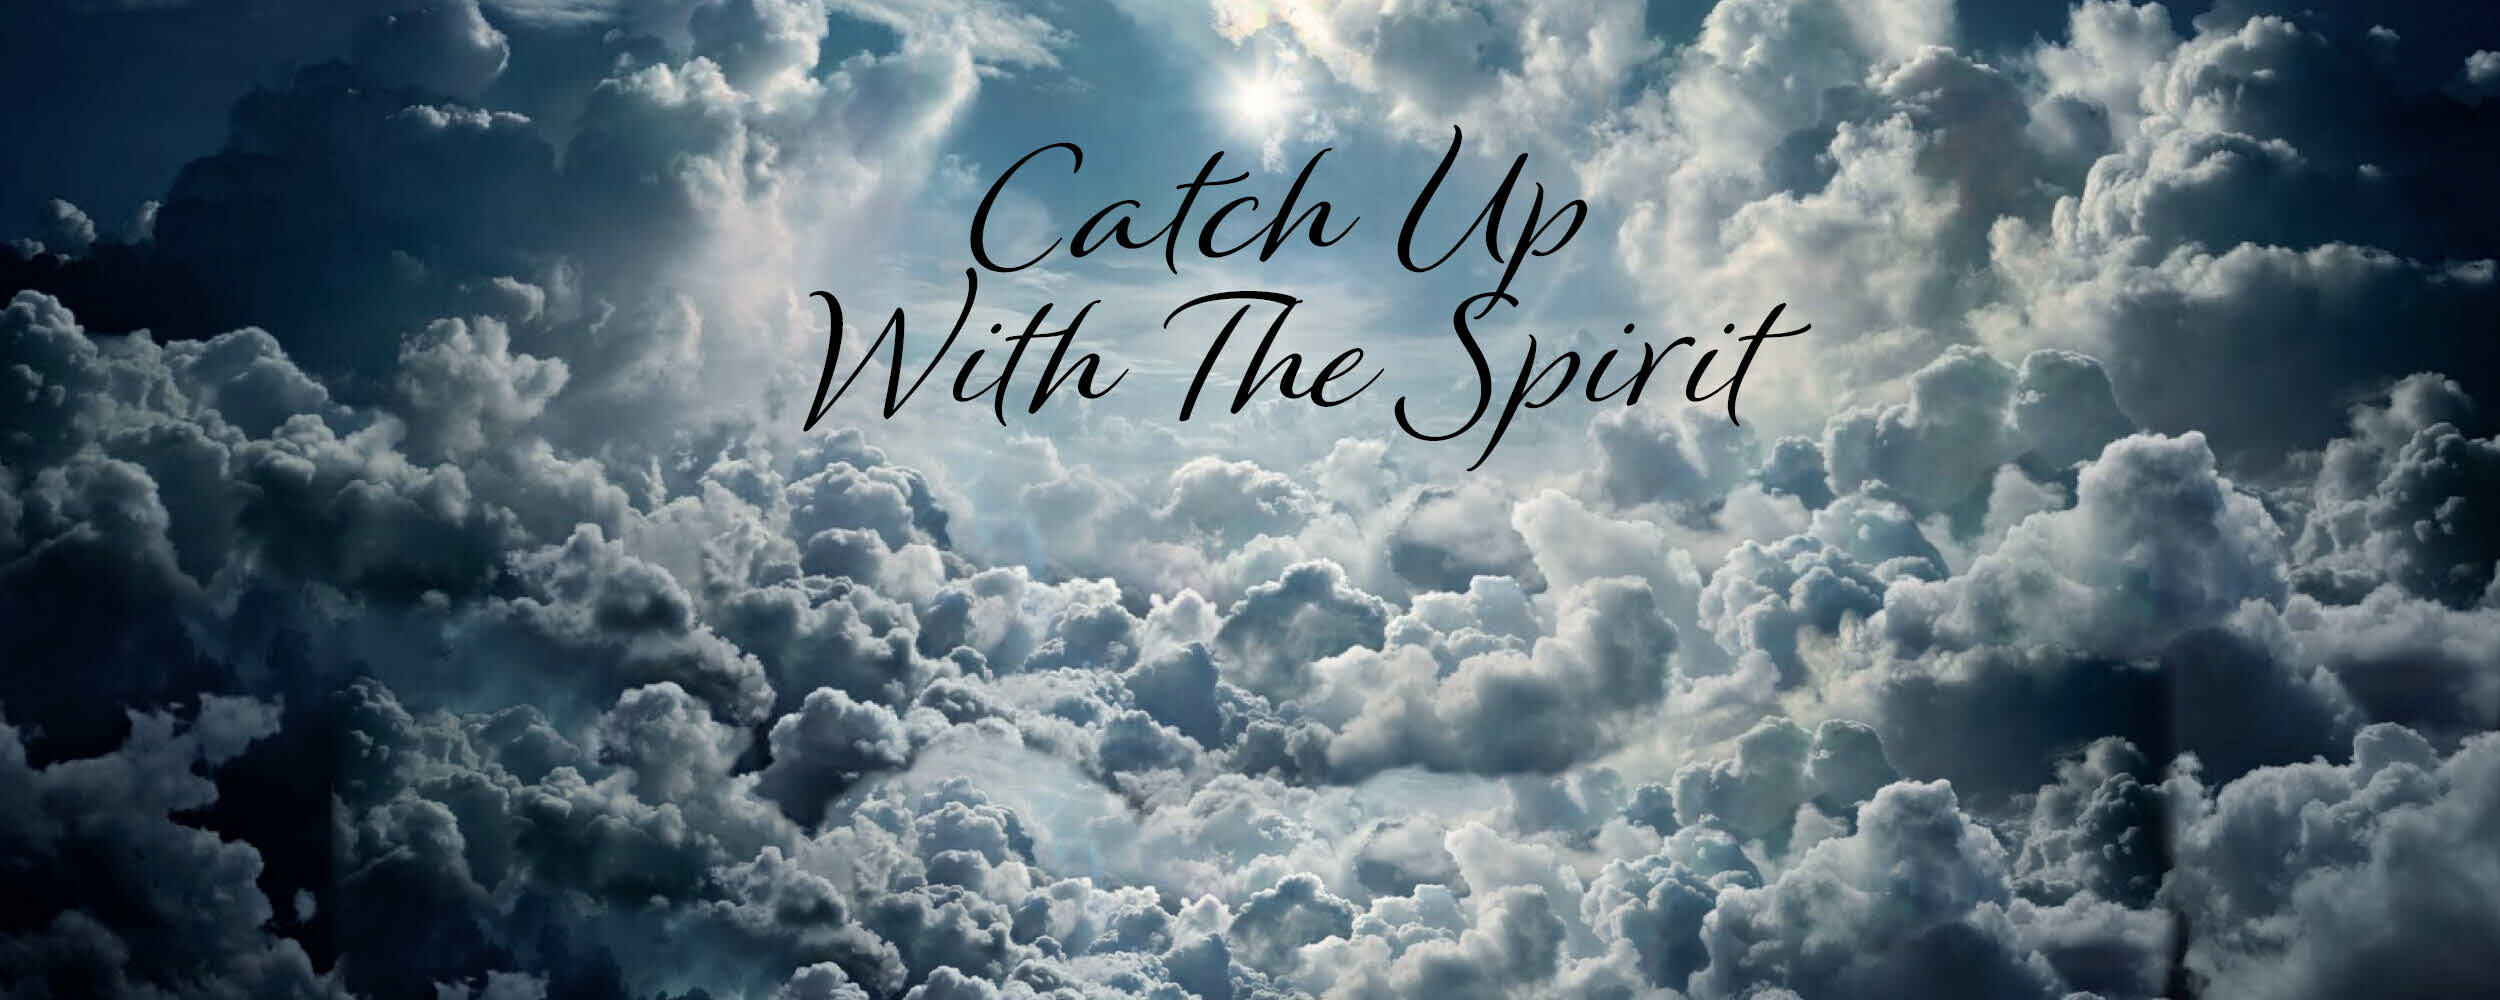 Catch Up With the Spirit, Children's Message